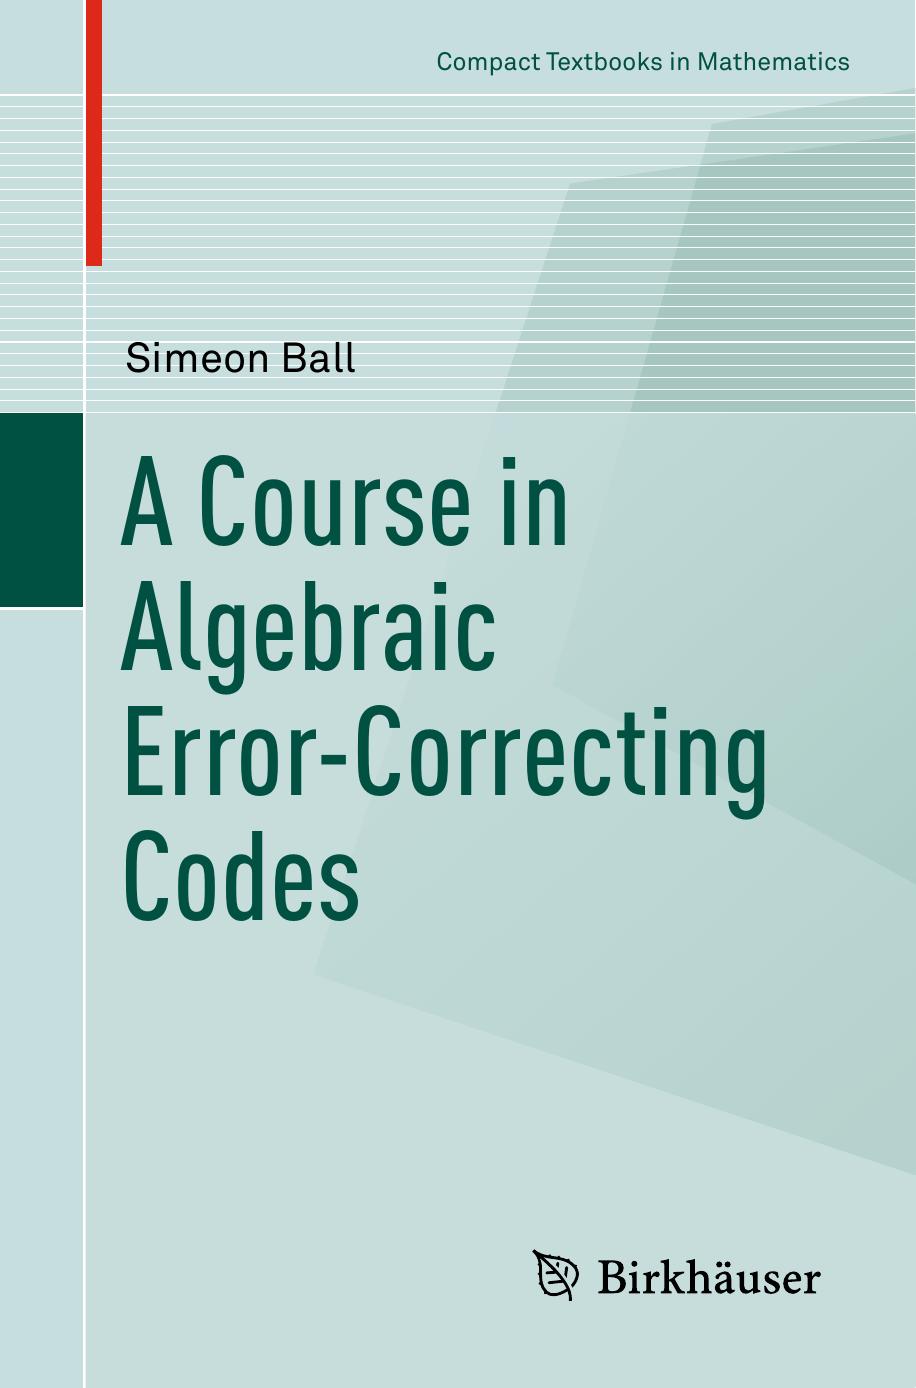 A Course in Algebraic Error-Correcting Codes by Simeon Ball